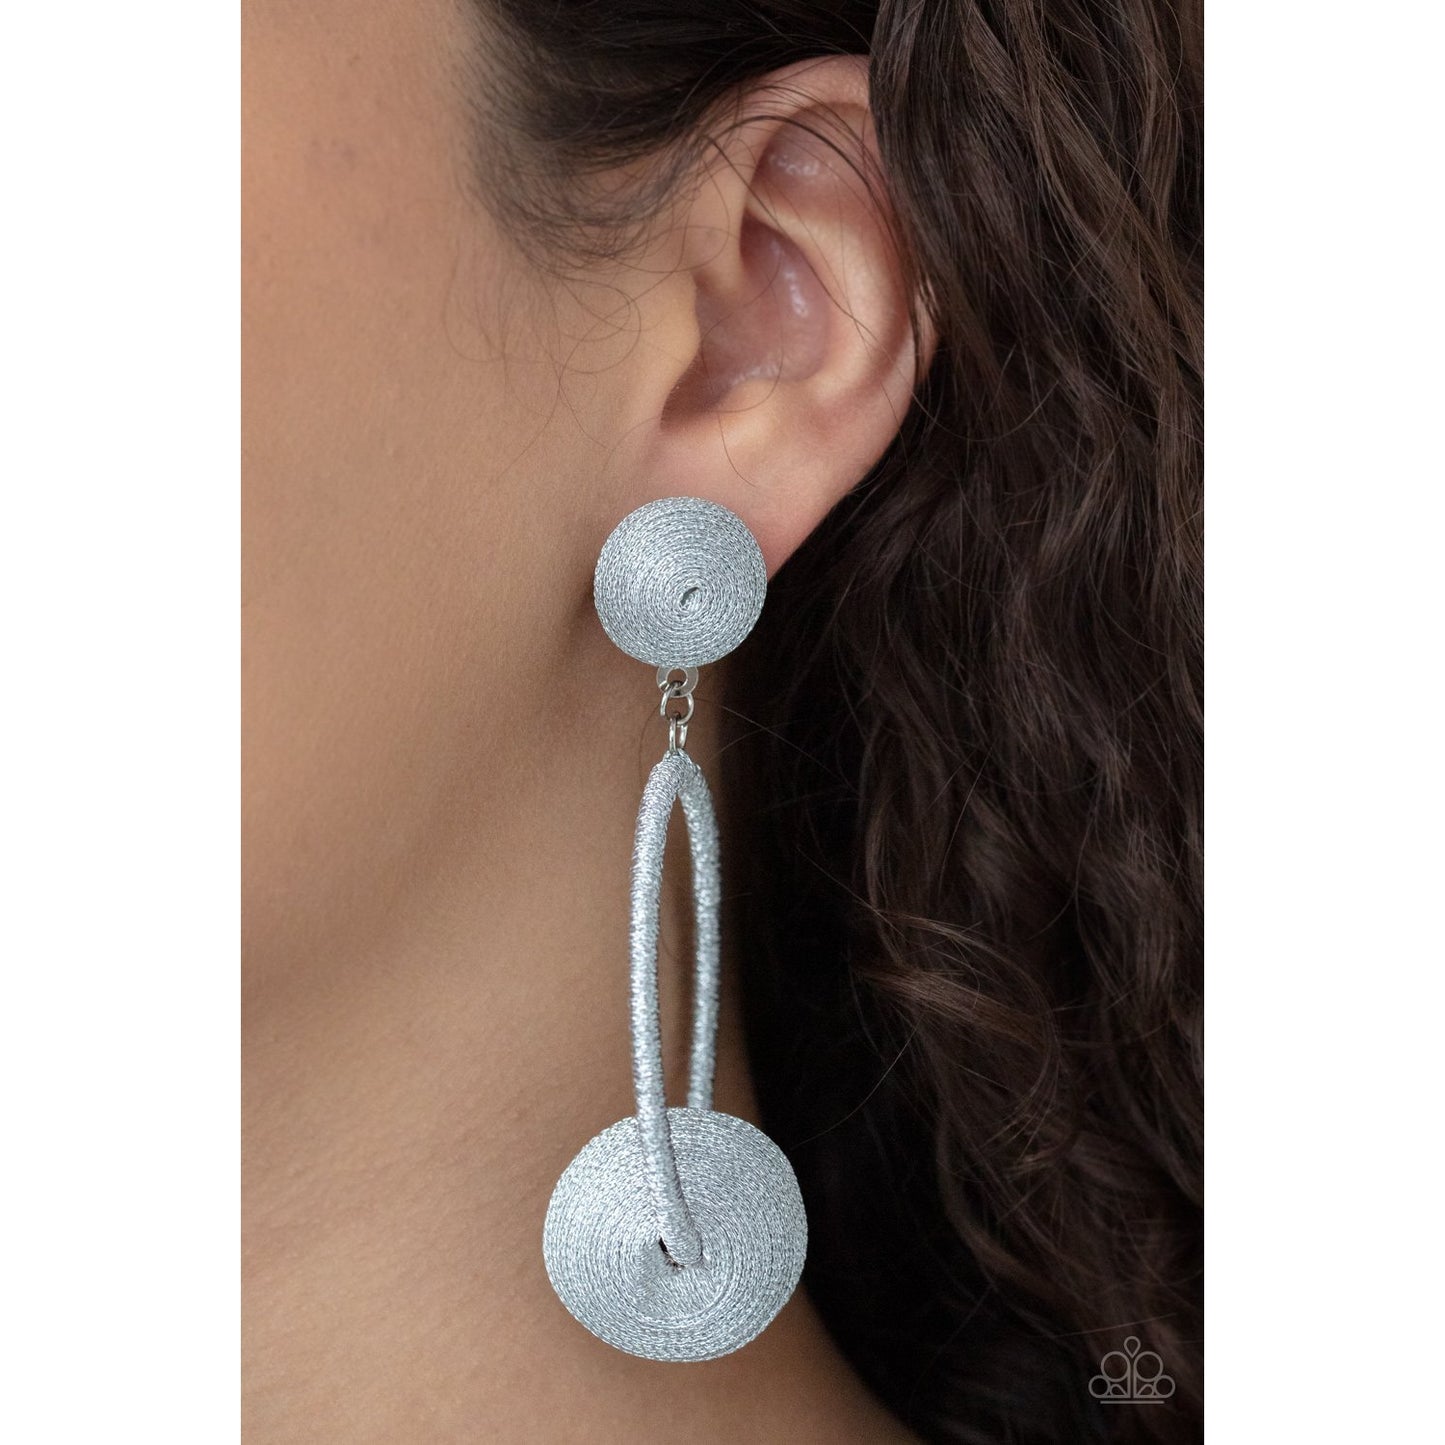 Social Sphere - Silver Earrings - Paparazzi Accessories - GlaMarous Titi Jewels